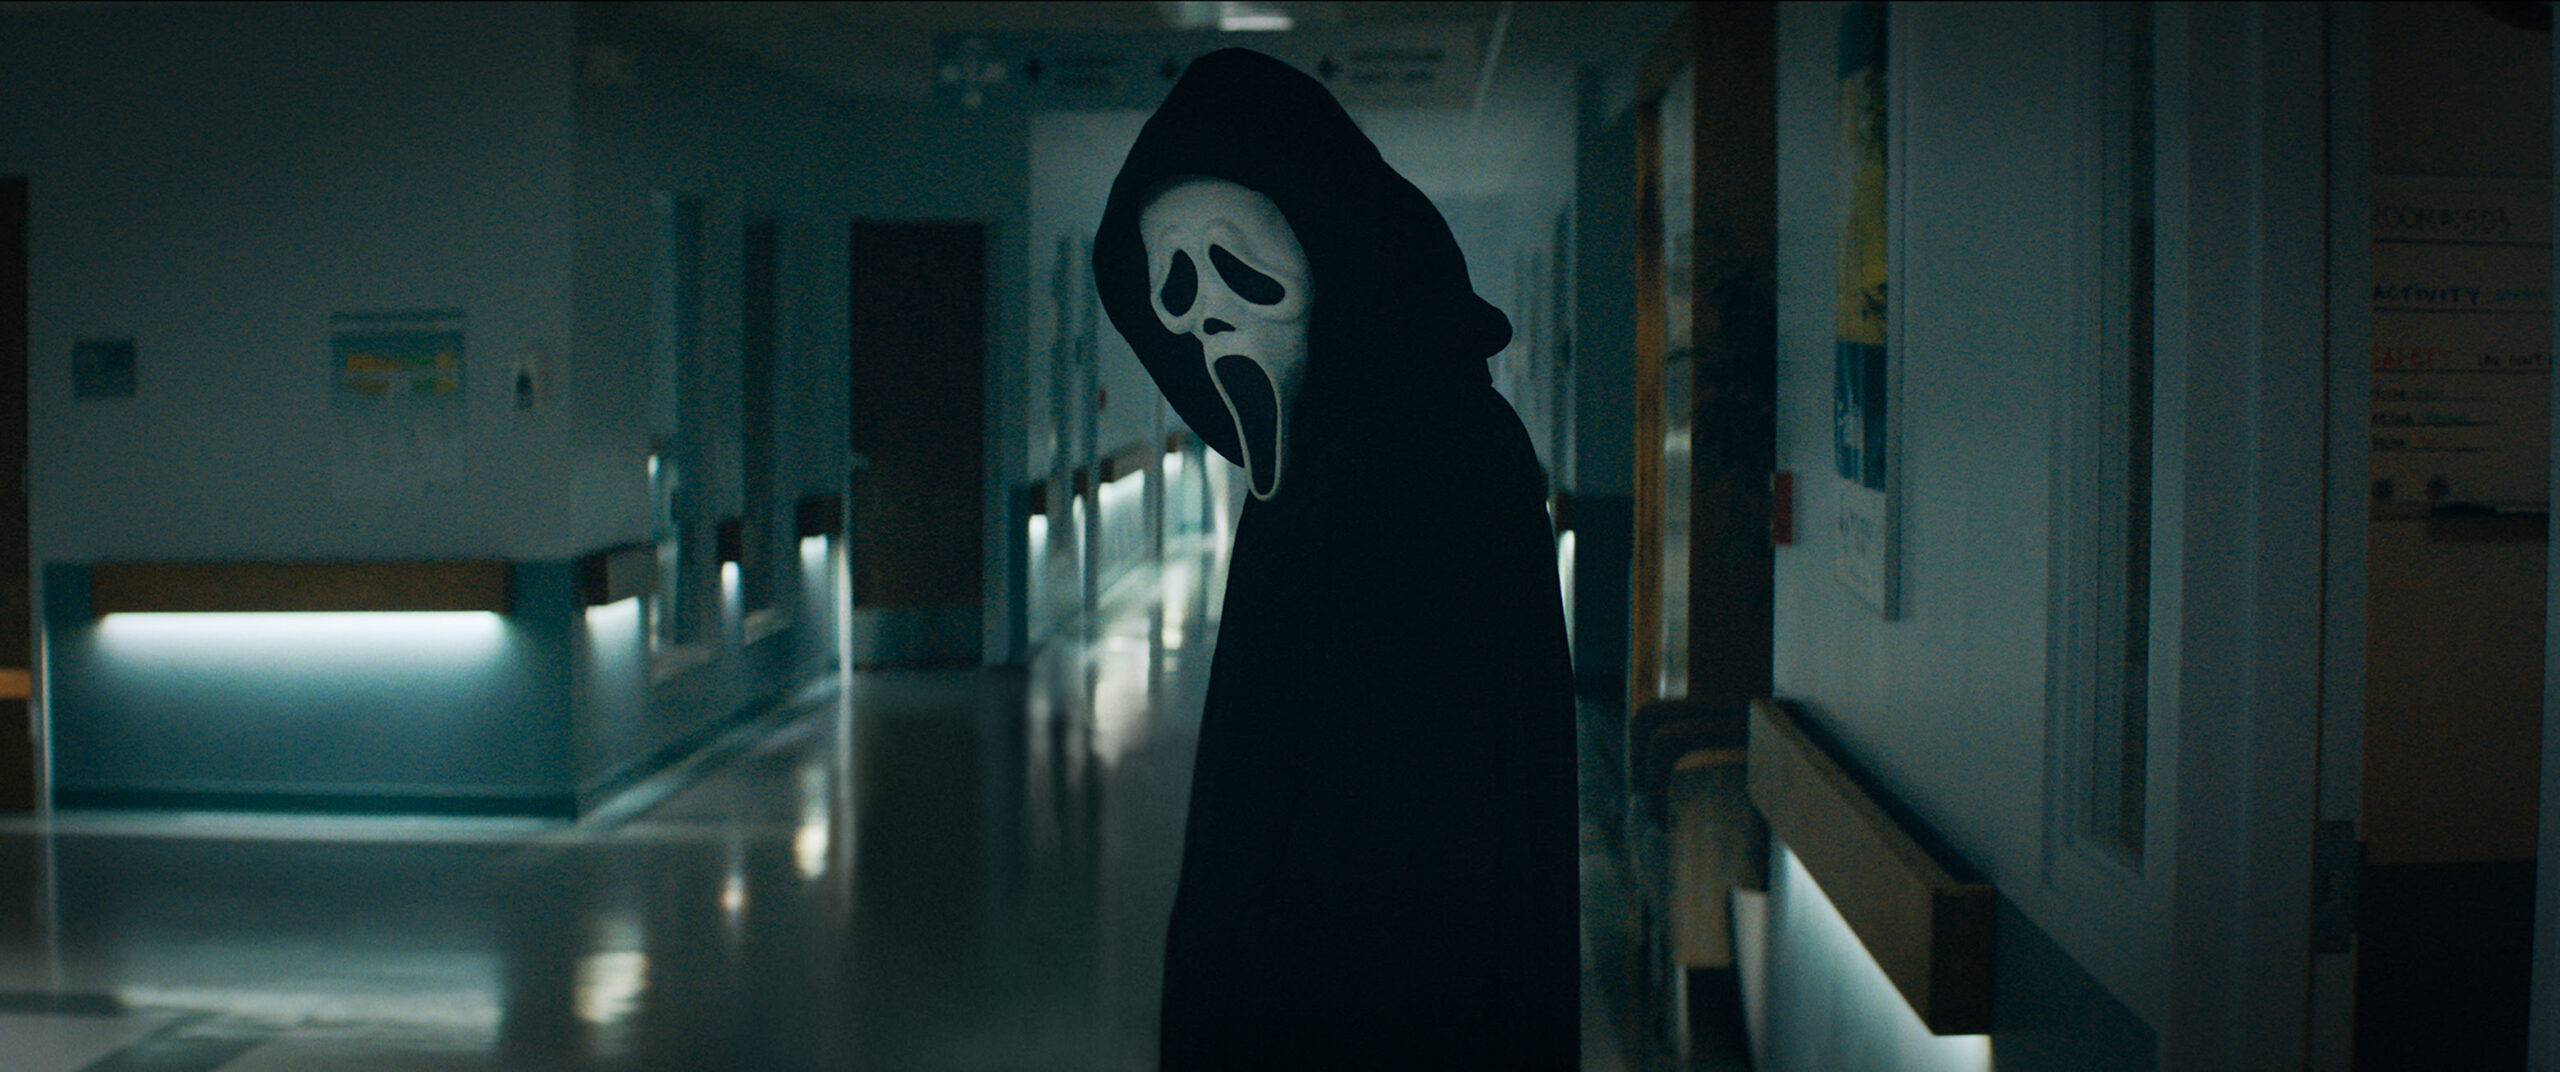 Scream 5: Ghostface attacca Jenna Ortega in una nuova immagine